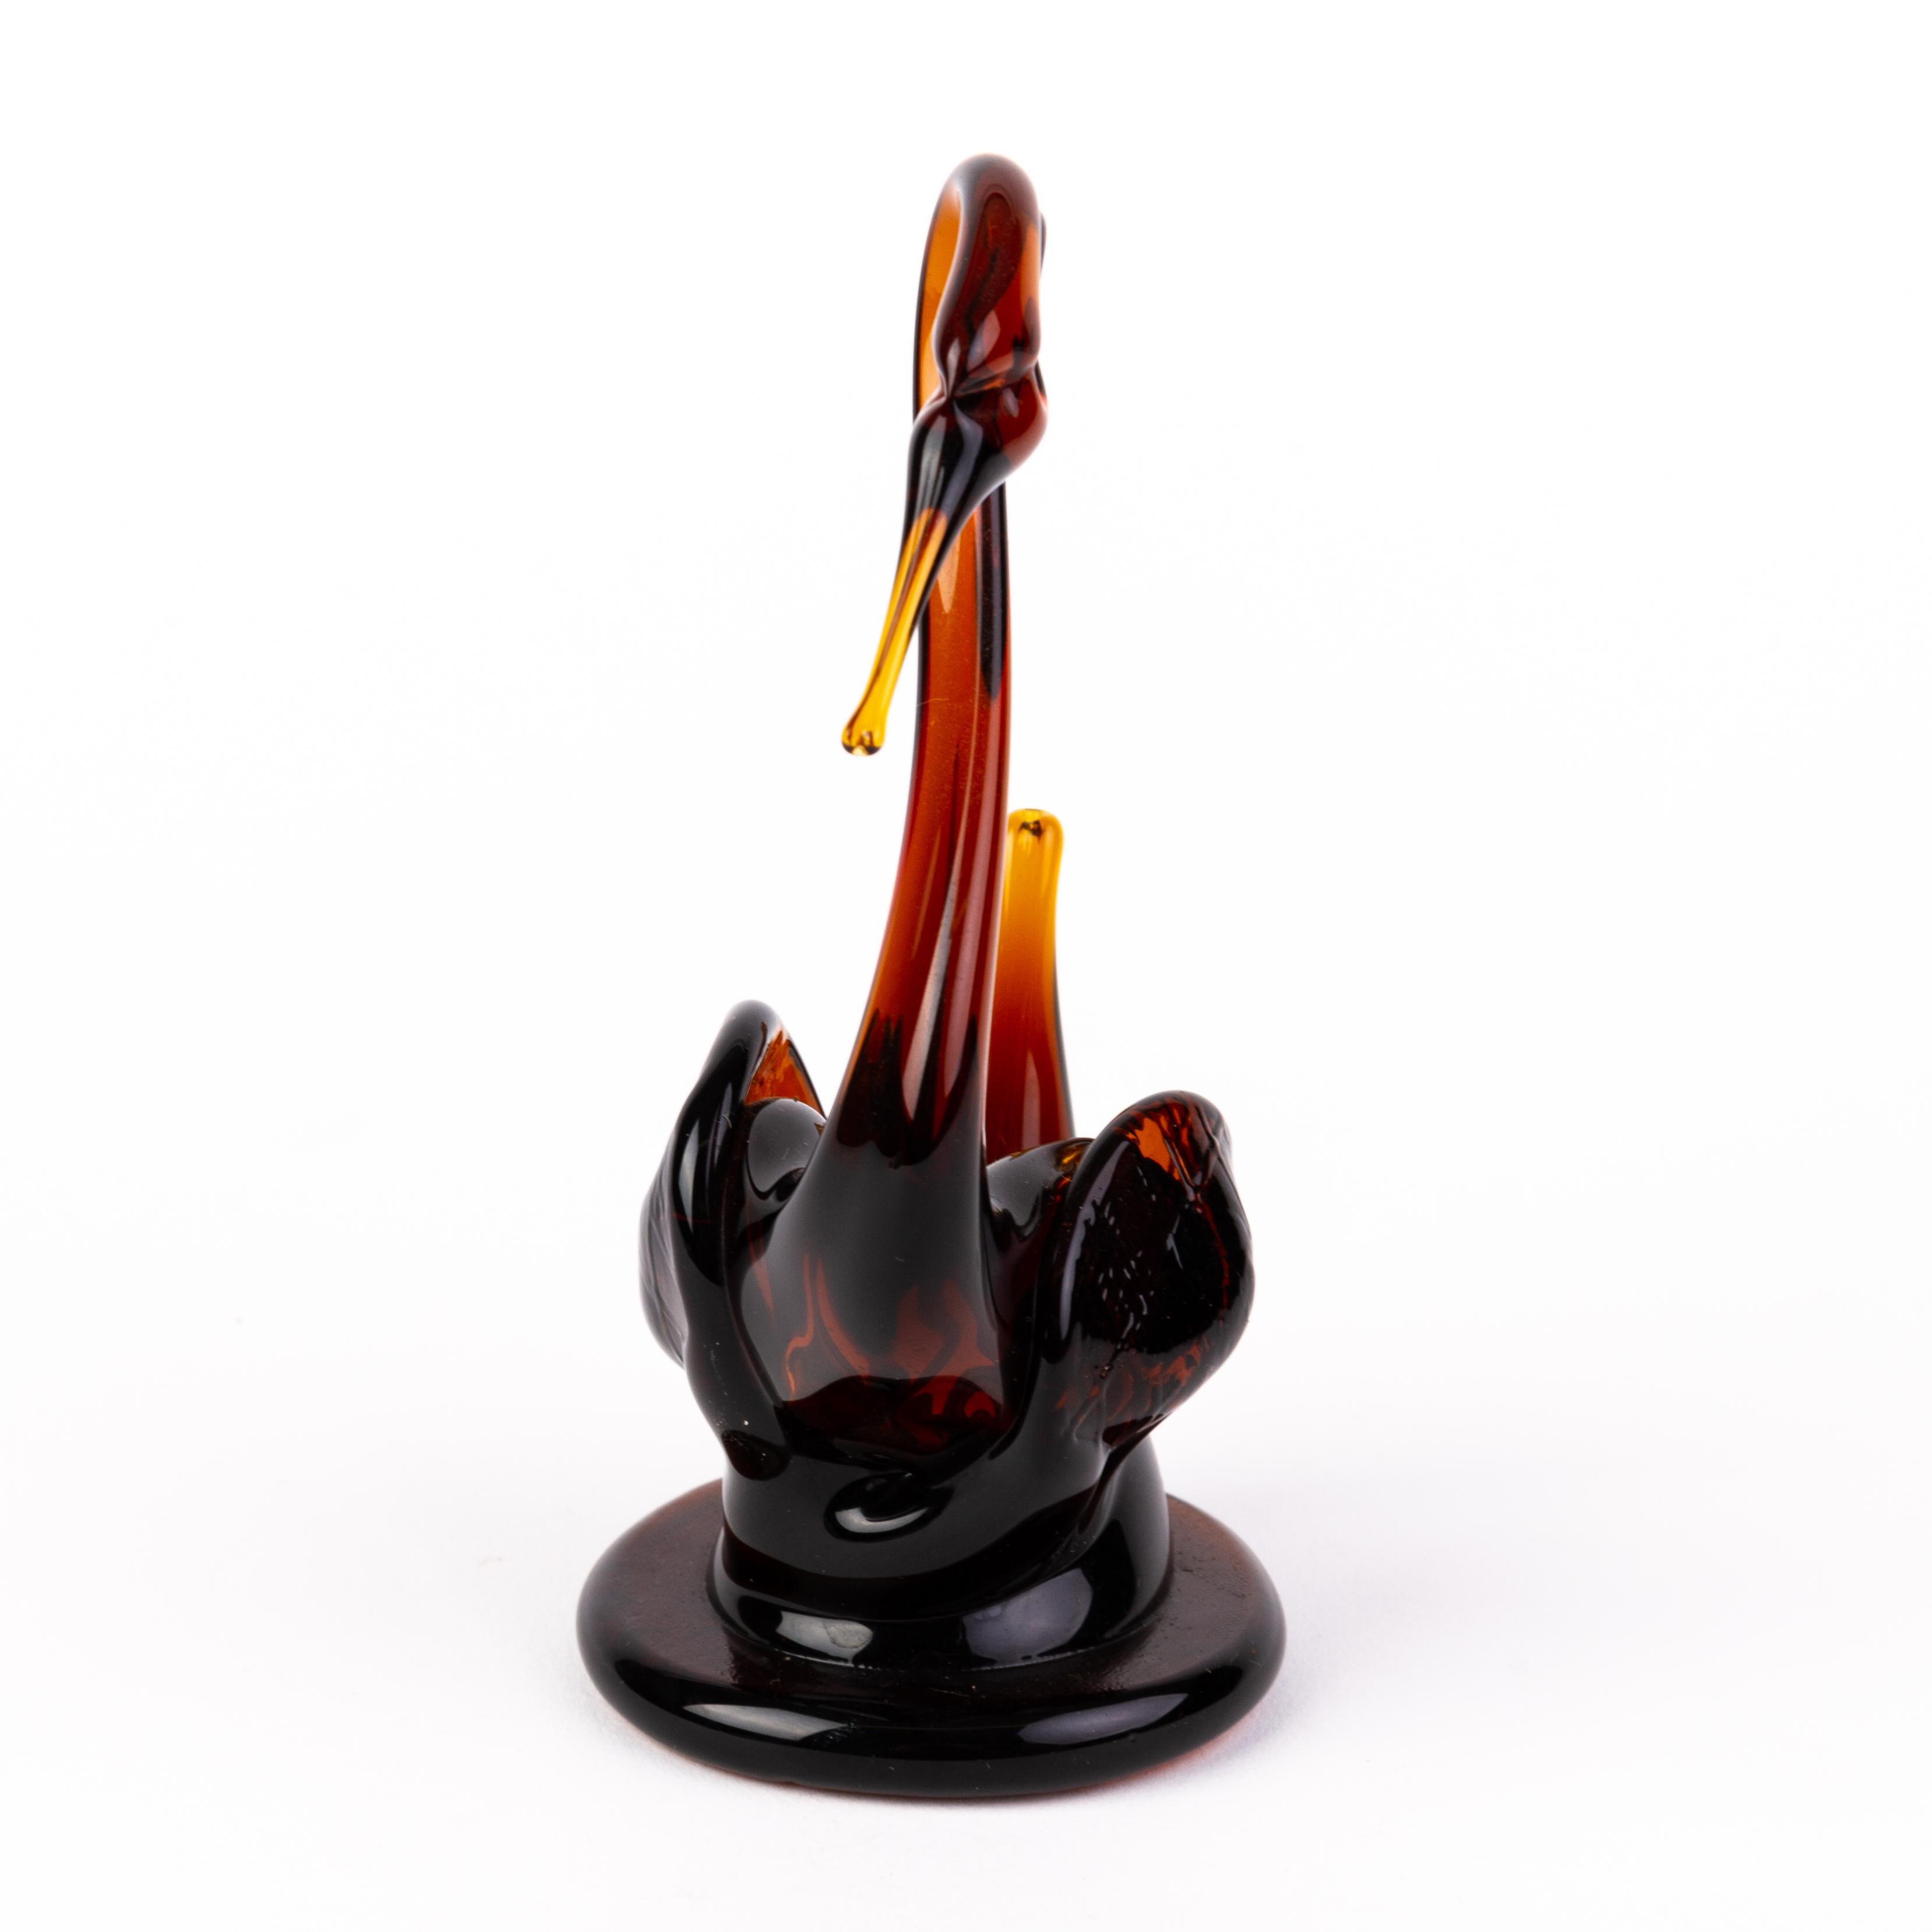 Murano Venetian Glass Swan Sculpture 
Good condition
Free international shipping.